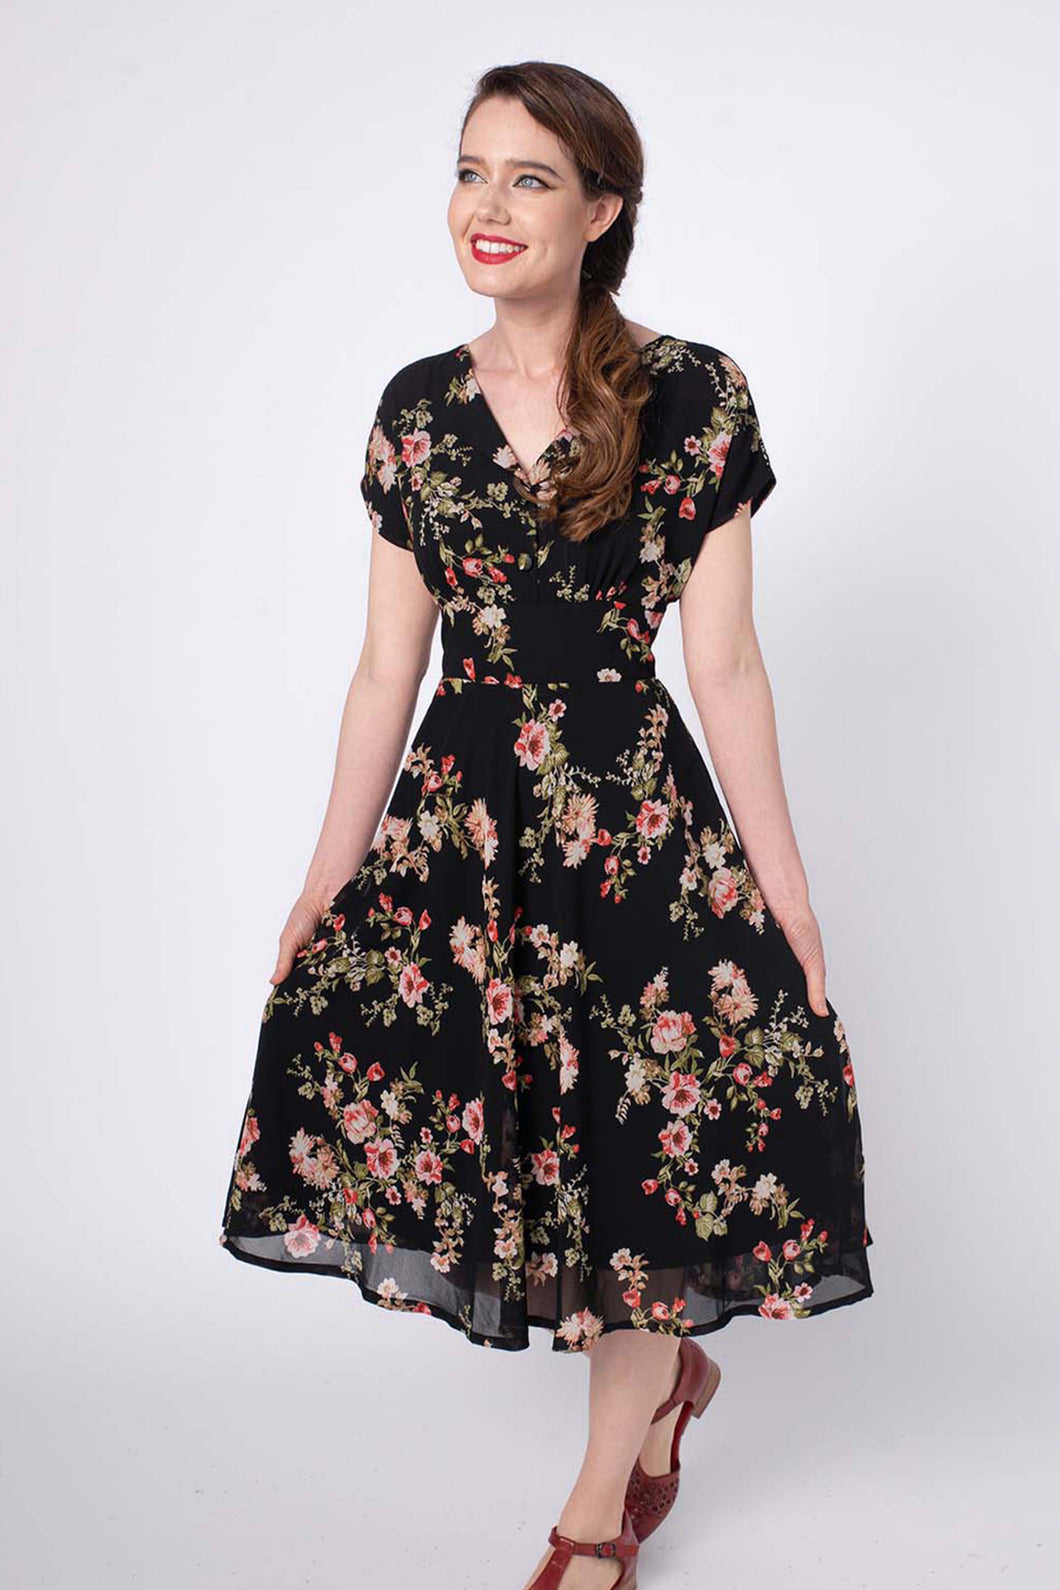 Dakota Black Floral Dress